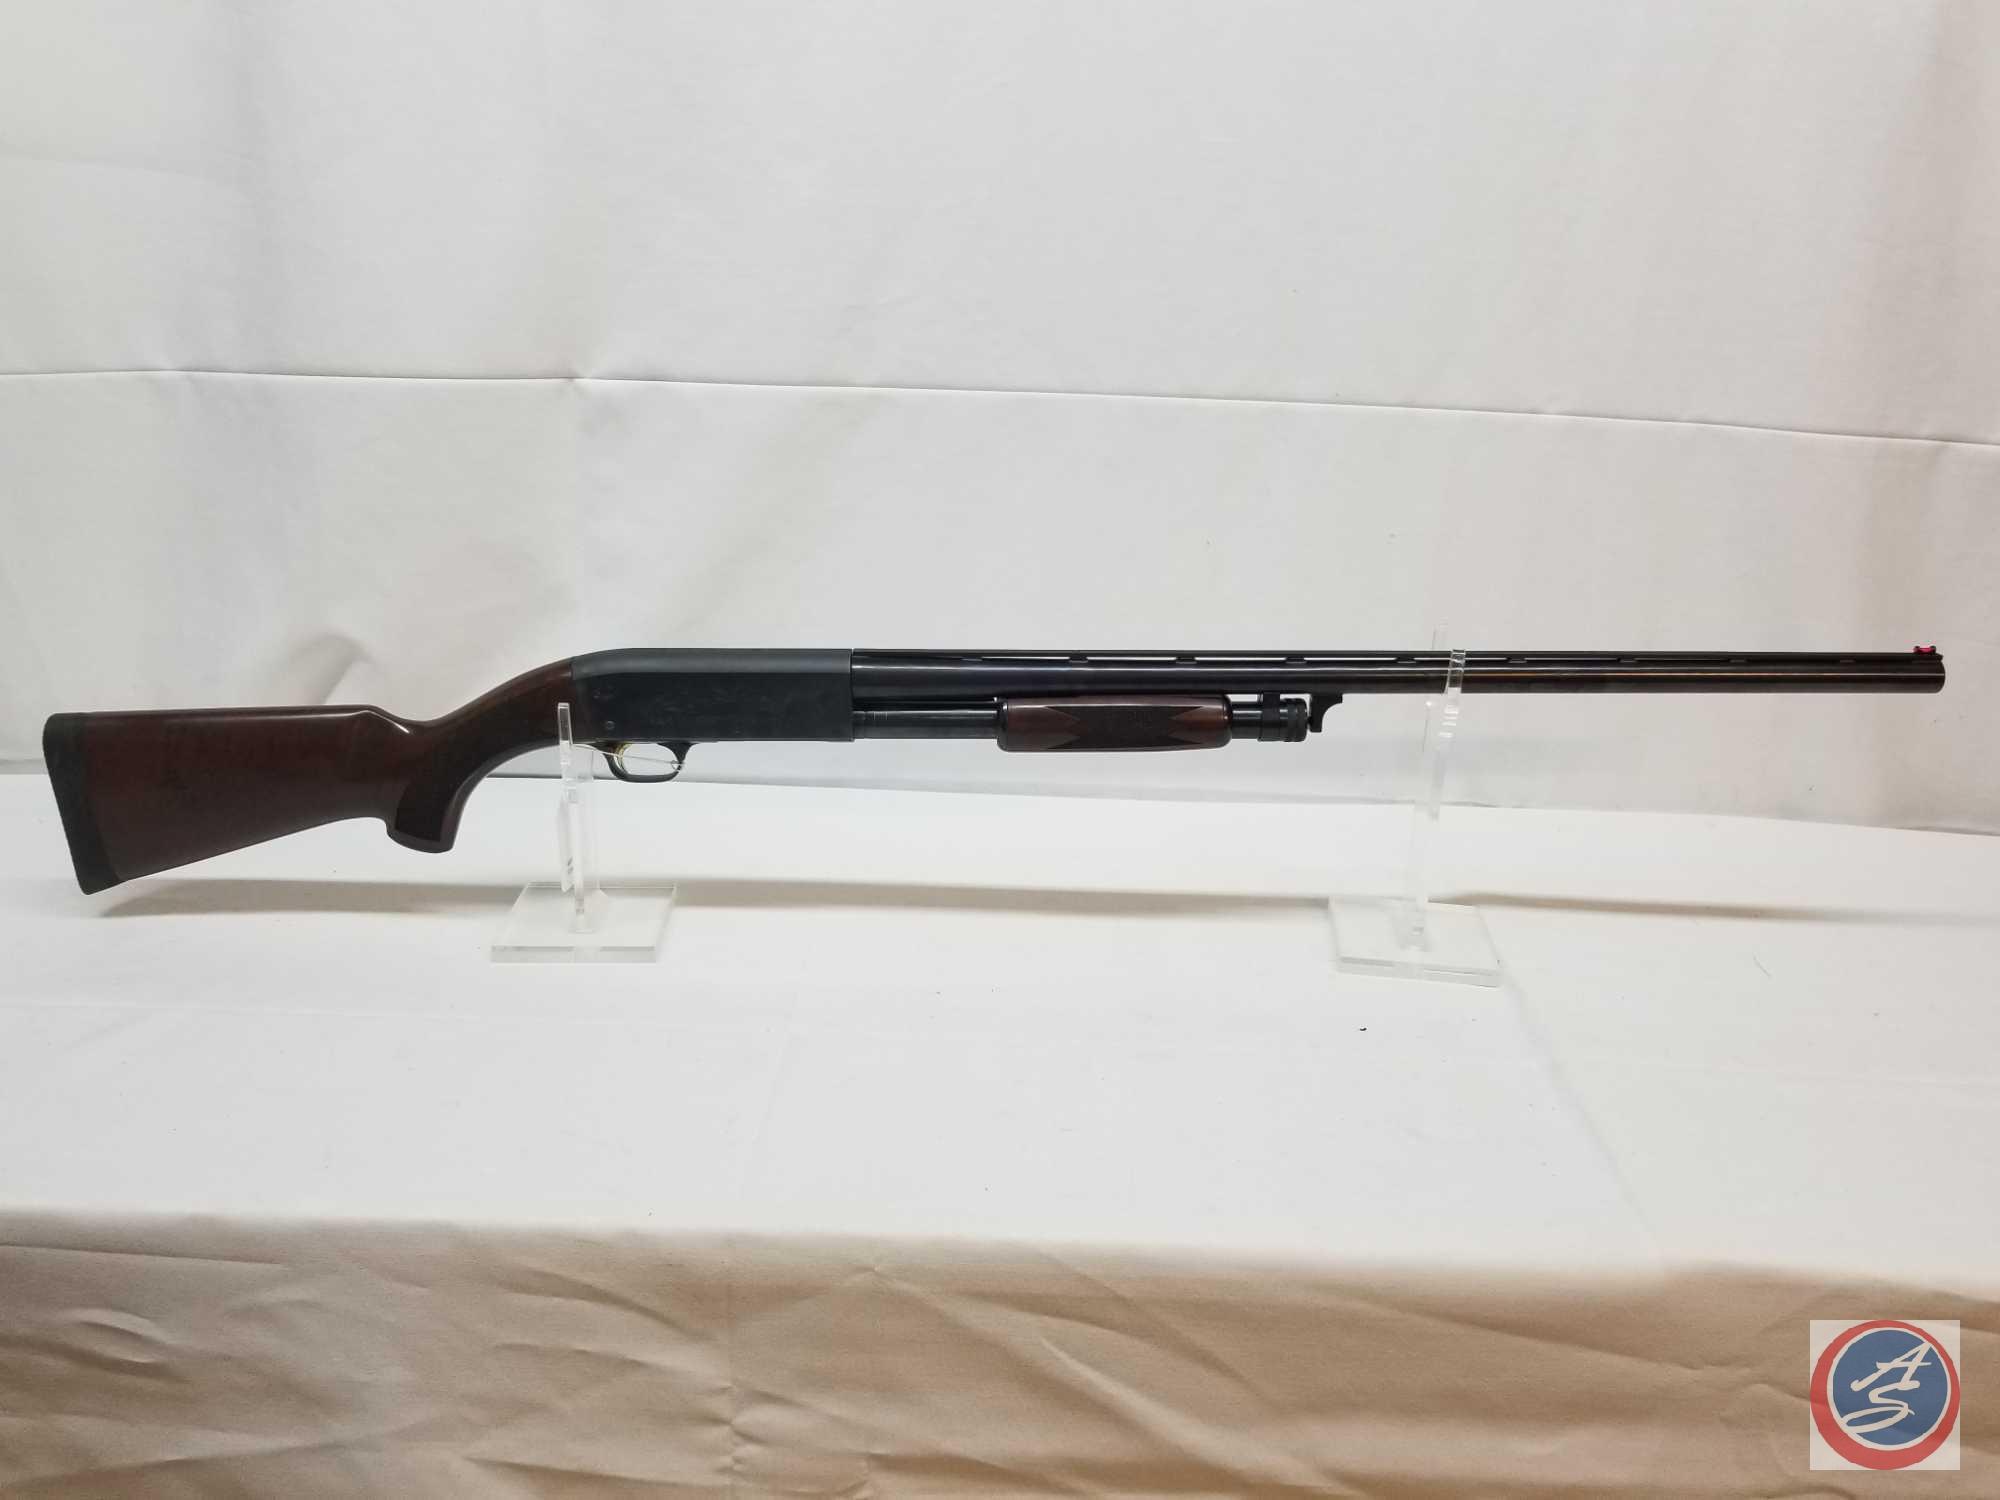 Ithaca Model M37 Featherlight Shotgun 12 GA 3" Pump Action Shotgun with factory engraving and